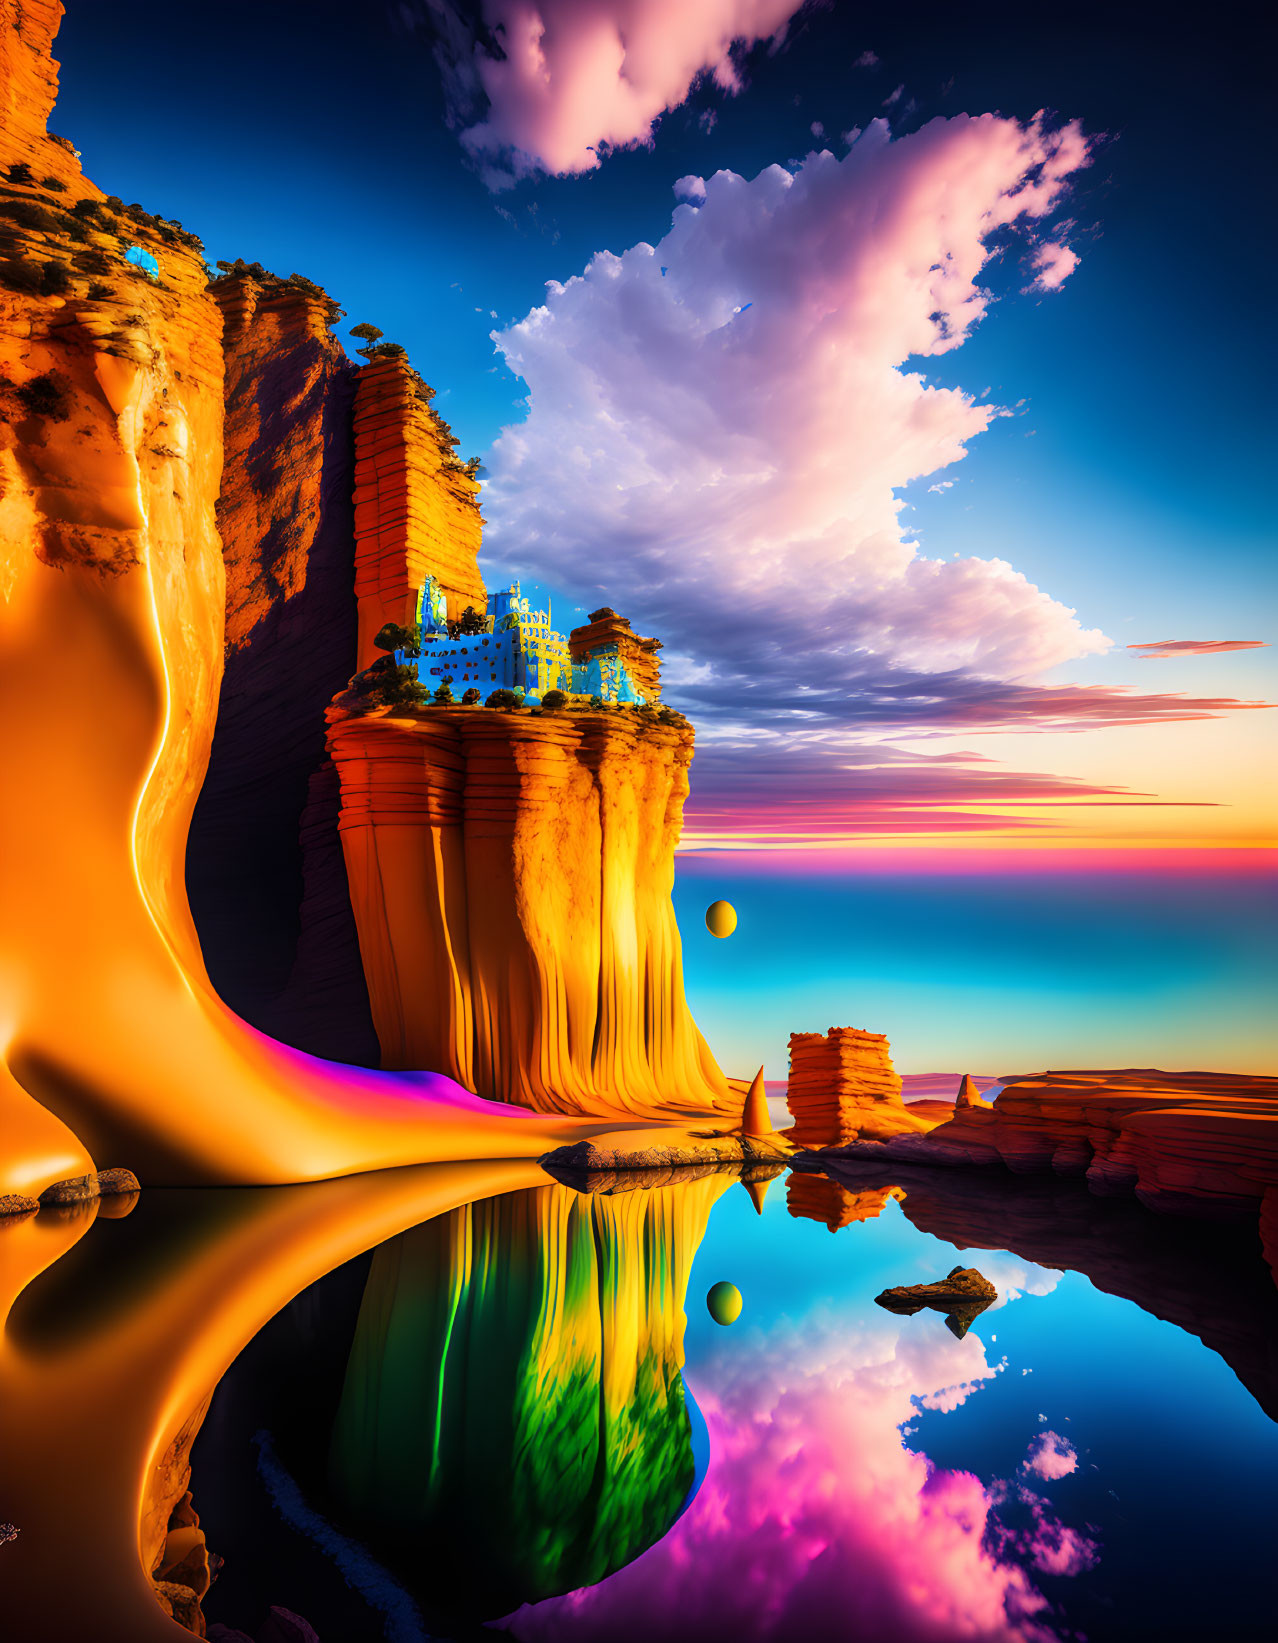 Vibrant cliffs, castle, lava falls, reflective water & colorful sunset in fantastical landscape